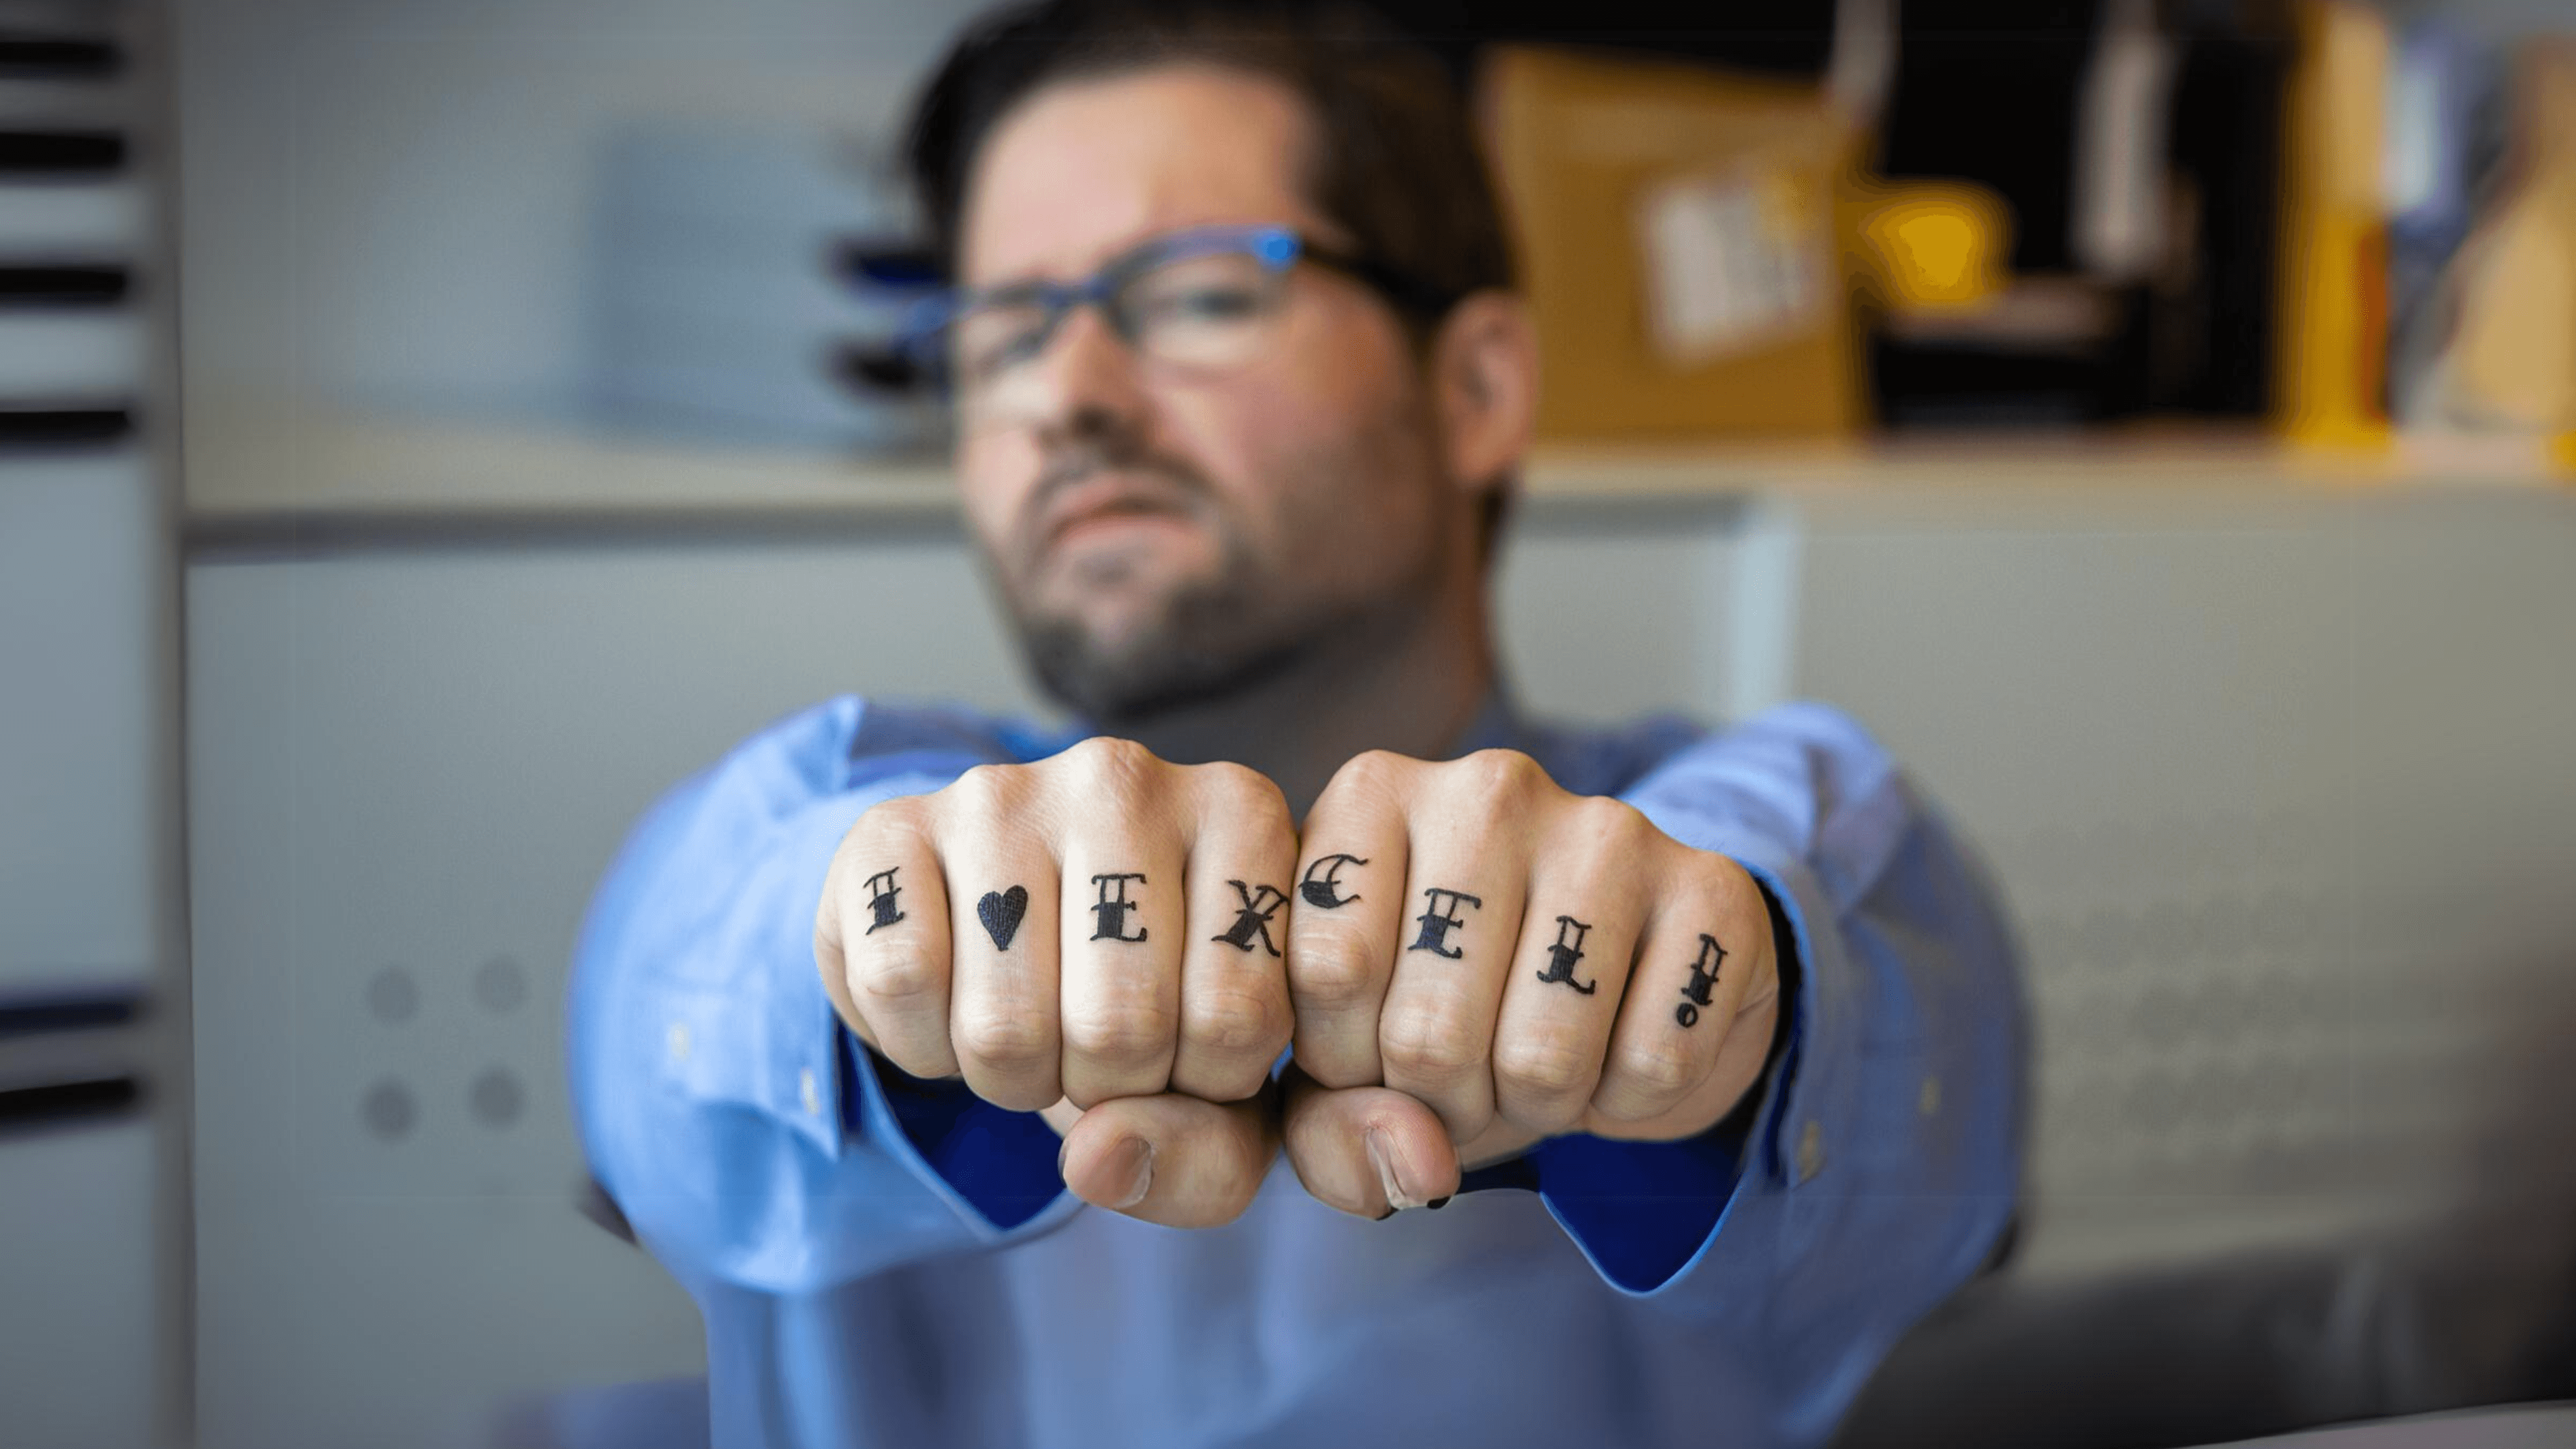 Finance medewerker met tattoo "I love excel!"